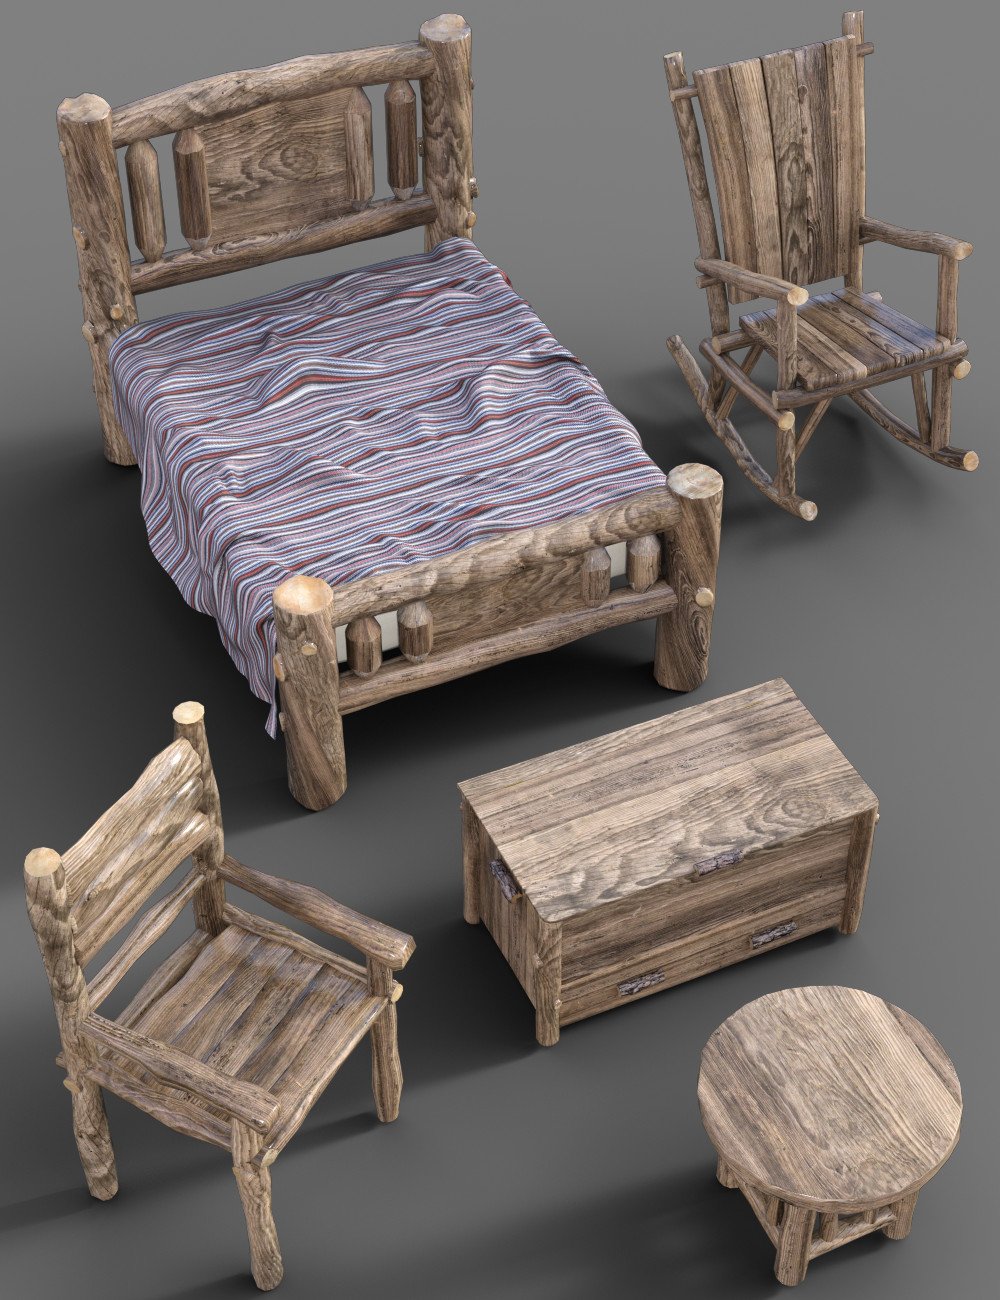 Rustic Furniture by: Merlin Studios, 3D Models by Daz 3D